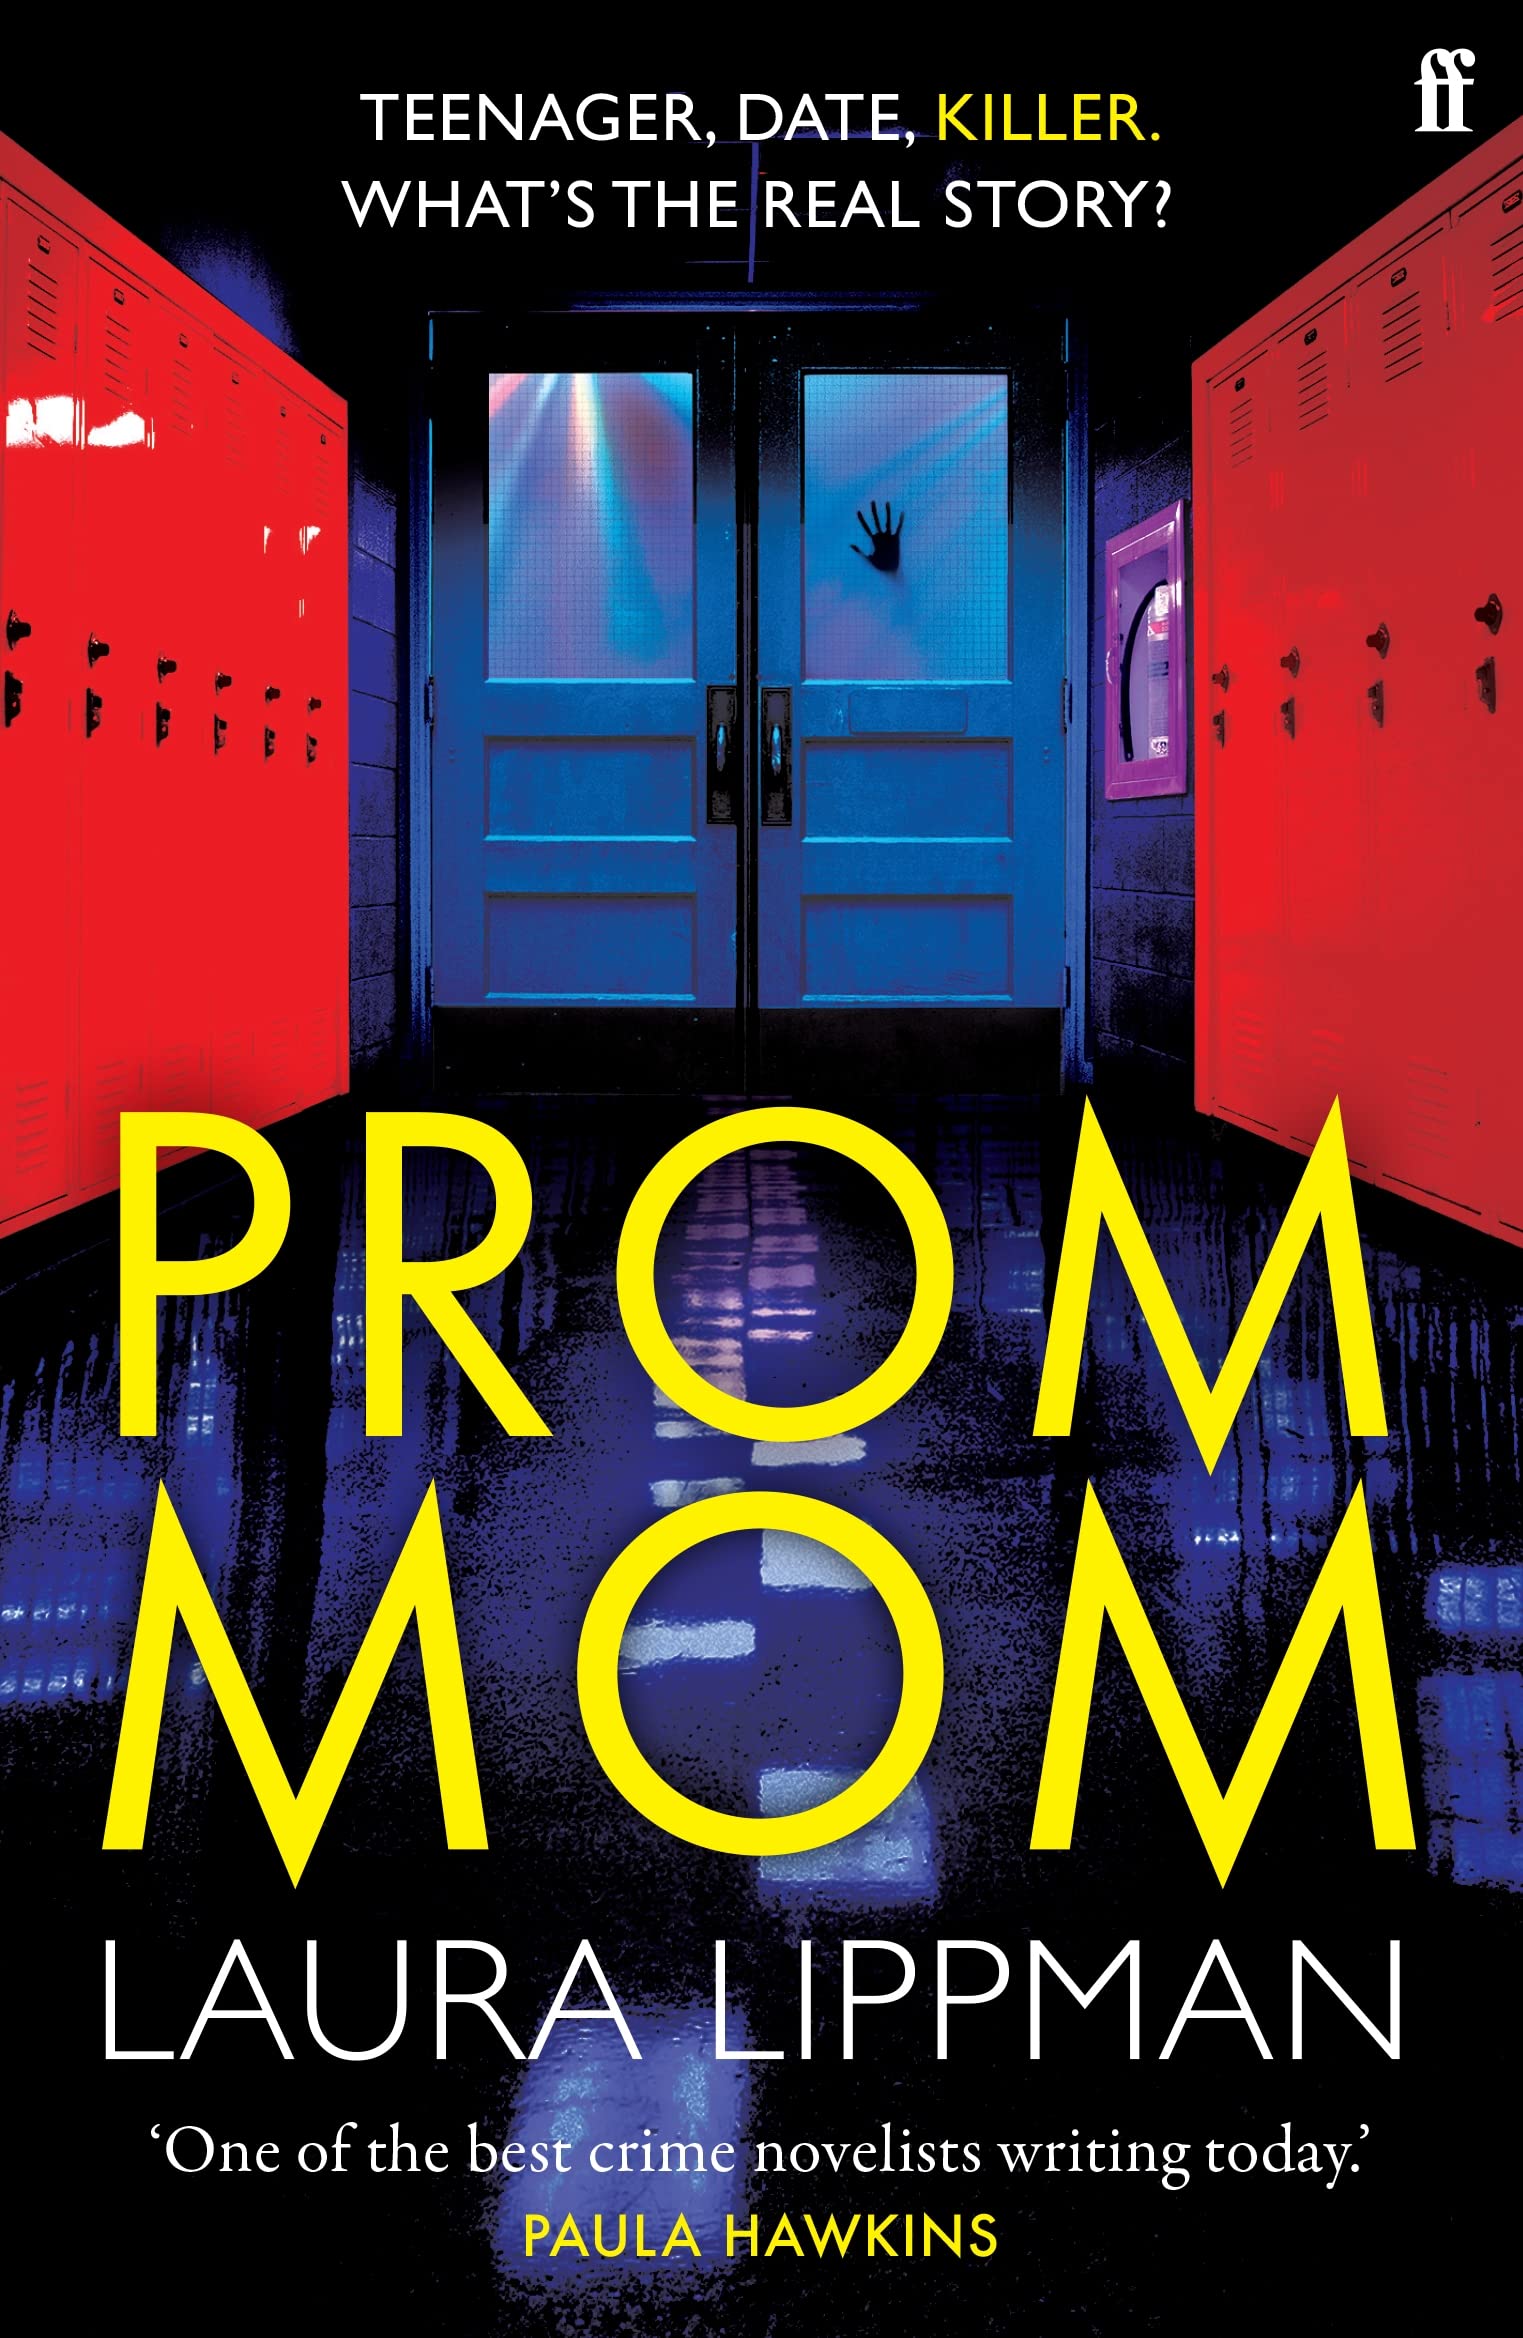 Prom Mom by Laura Lippman